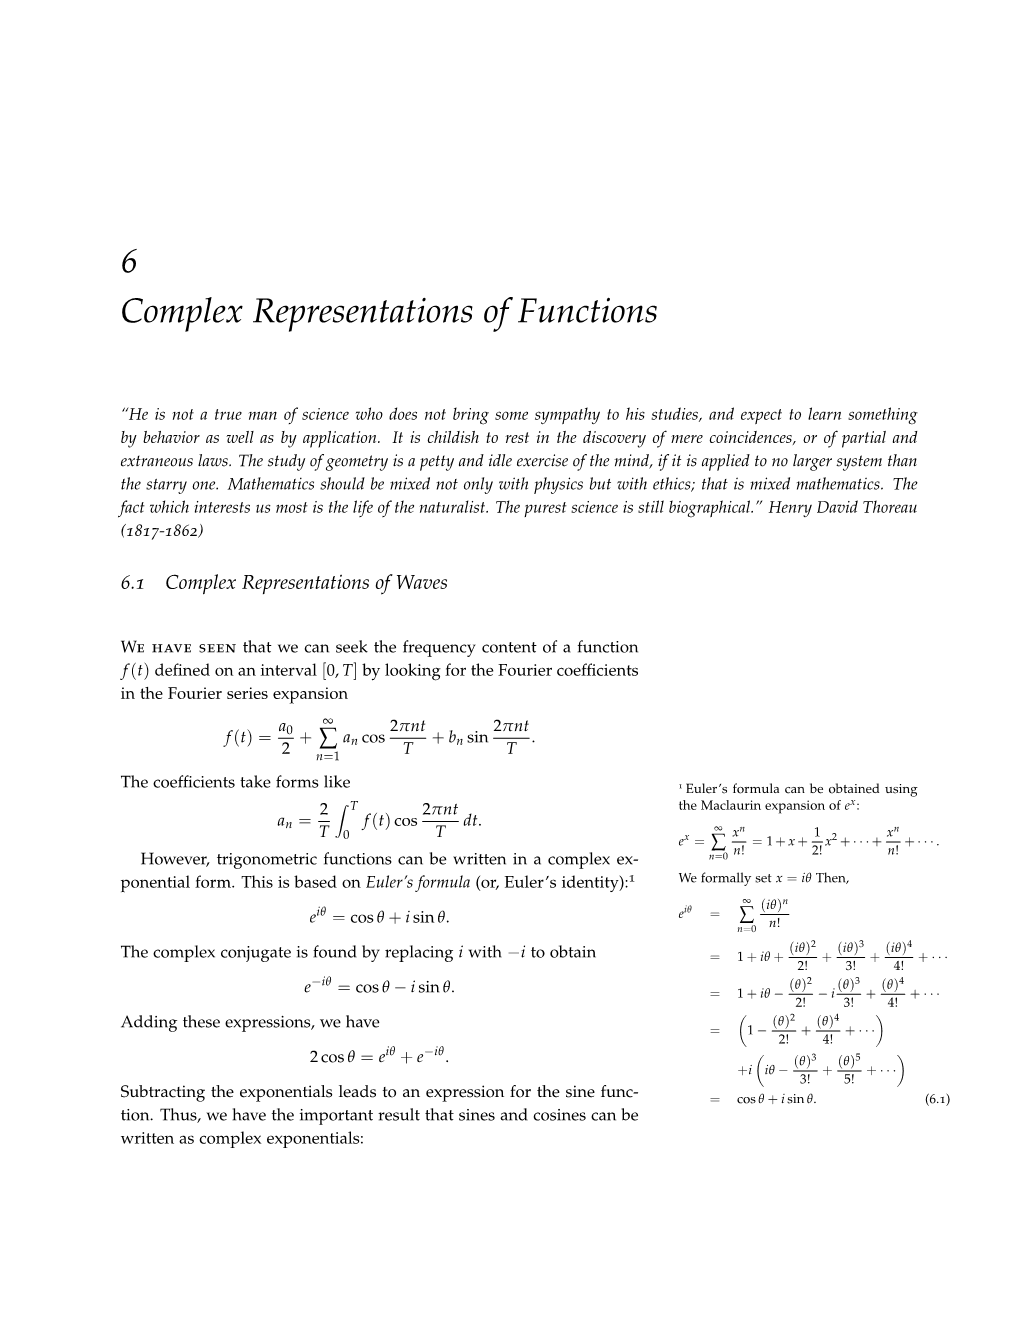 Complex Representations of Functions